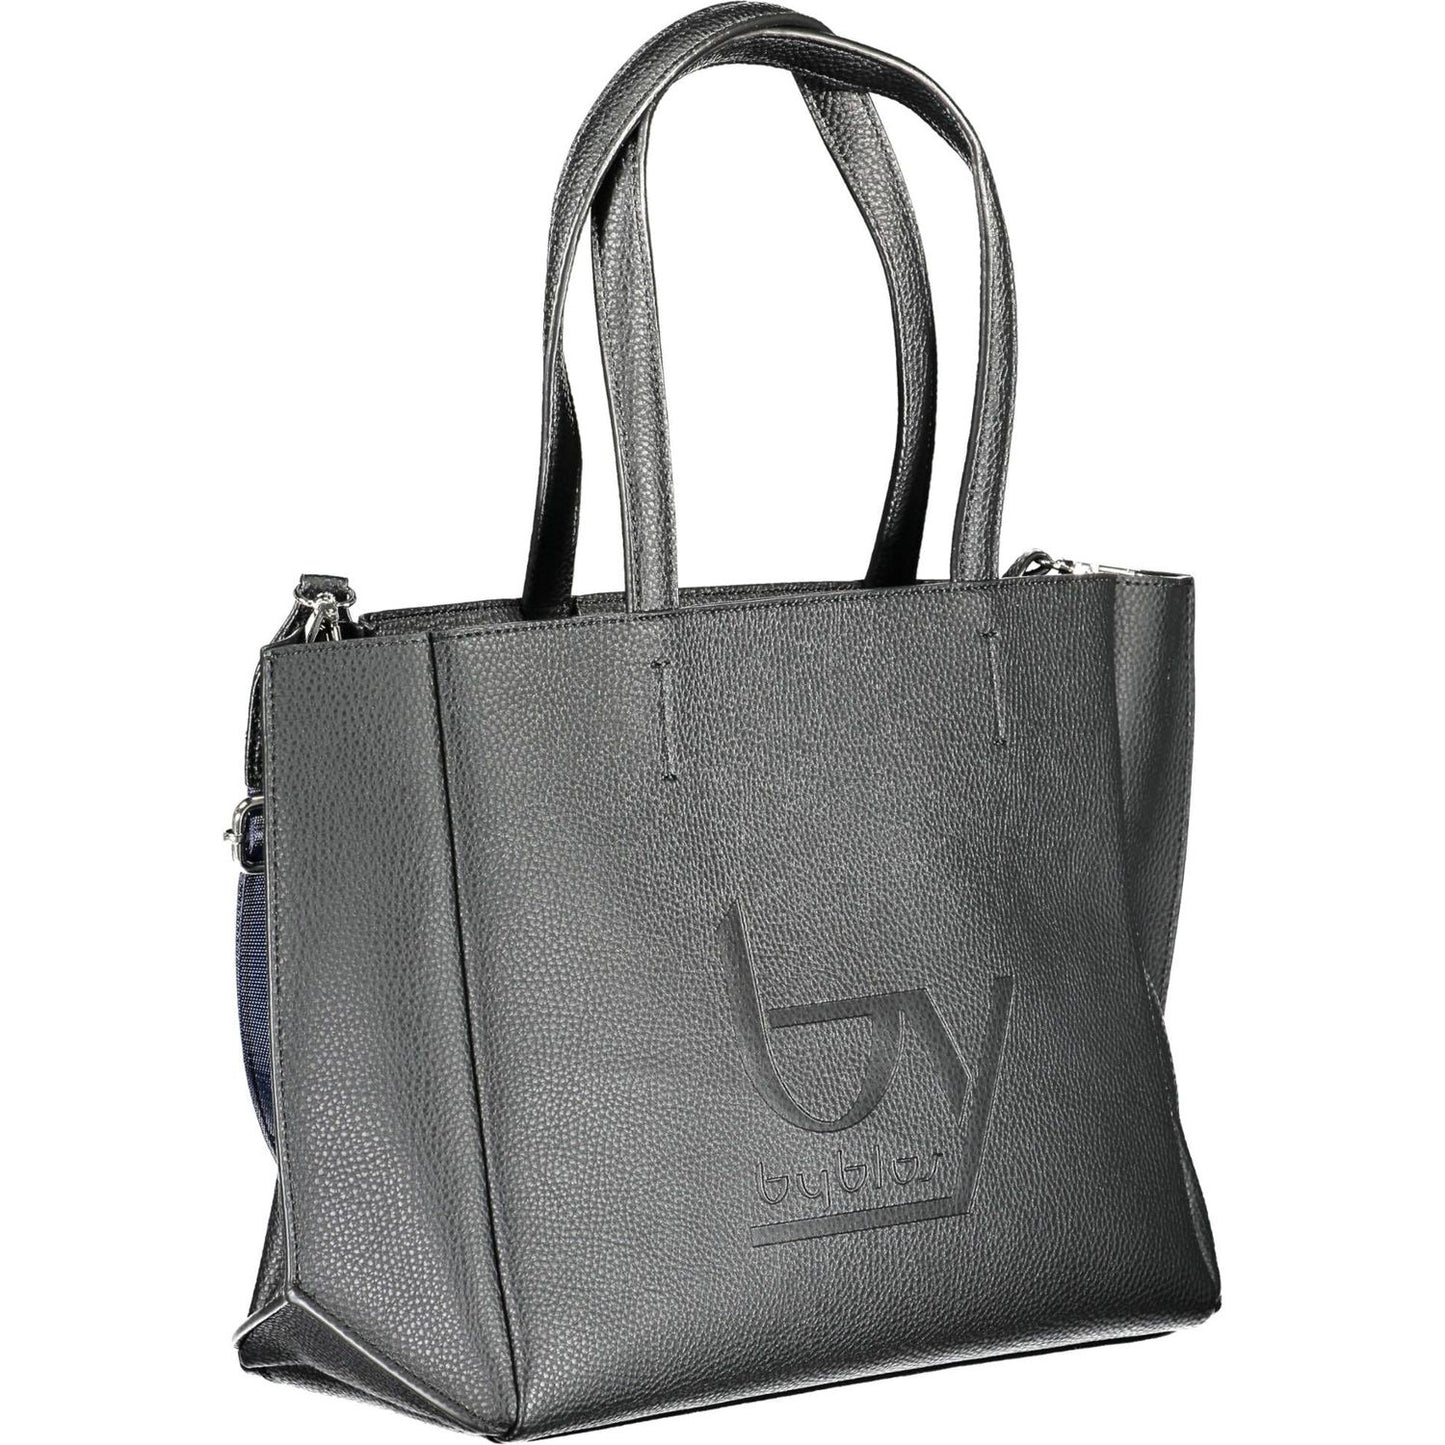 BYBLOS Chic Black Dual-Handle Printed Handbag chic-black-dual-handle-printed-handbag